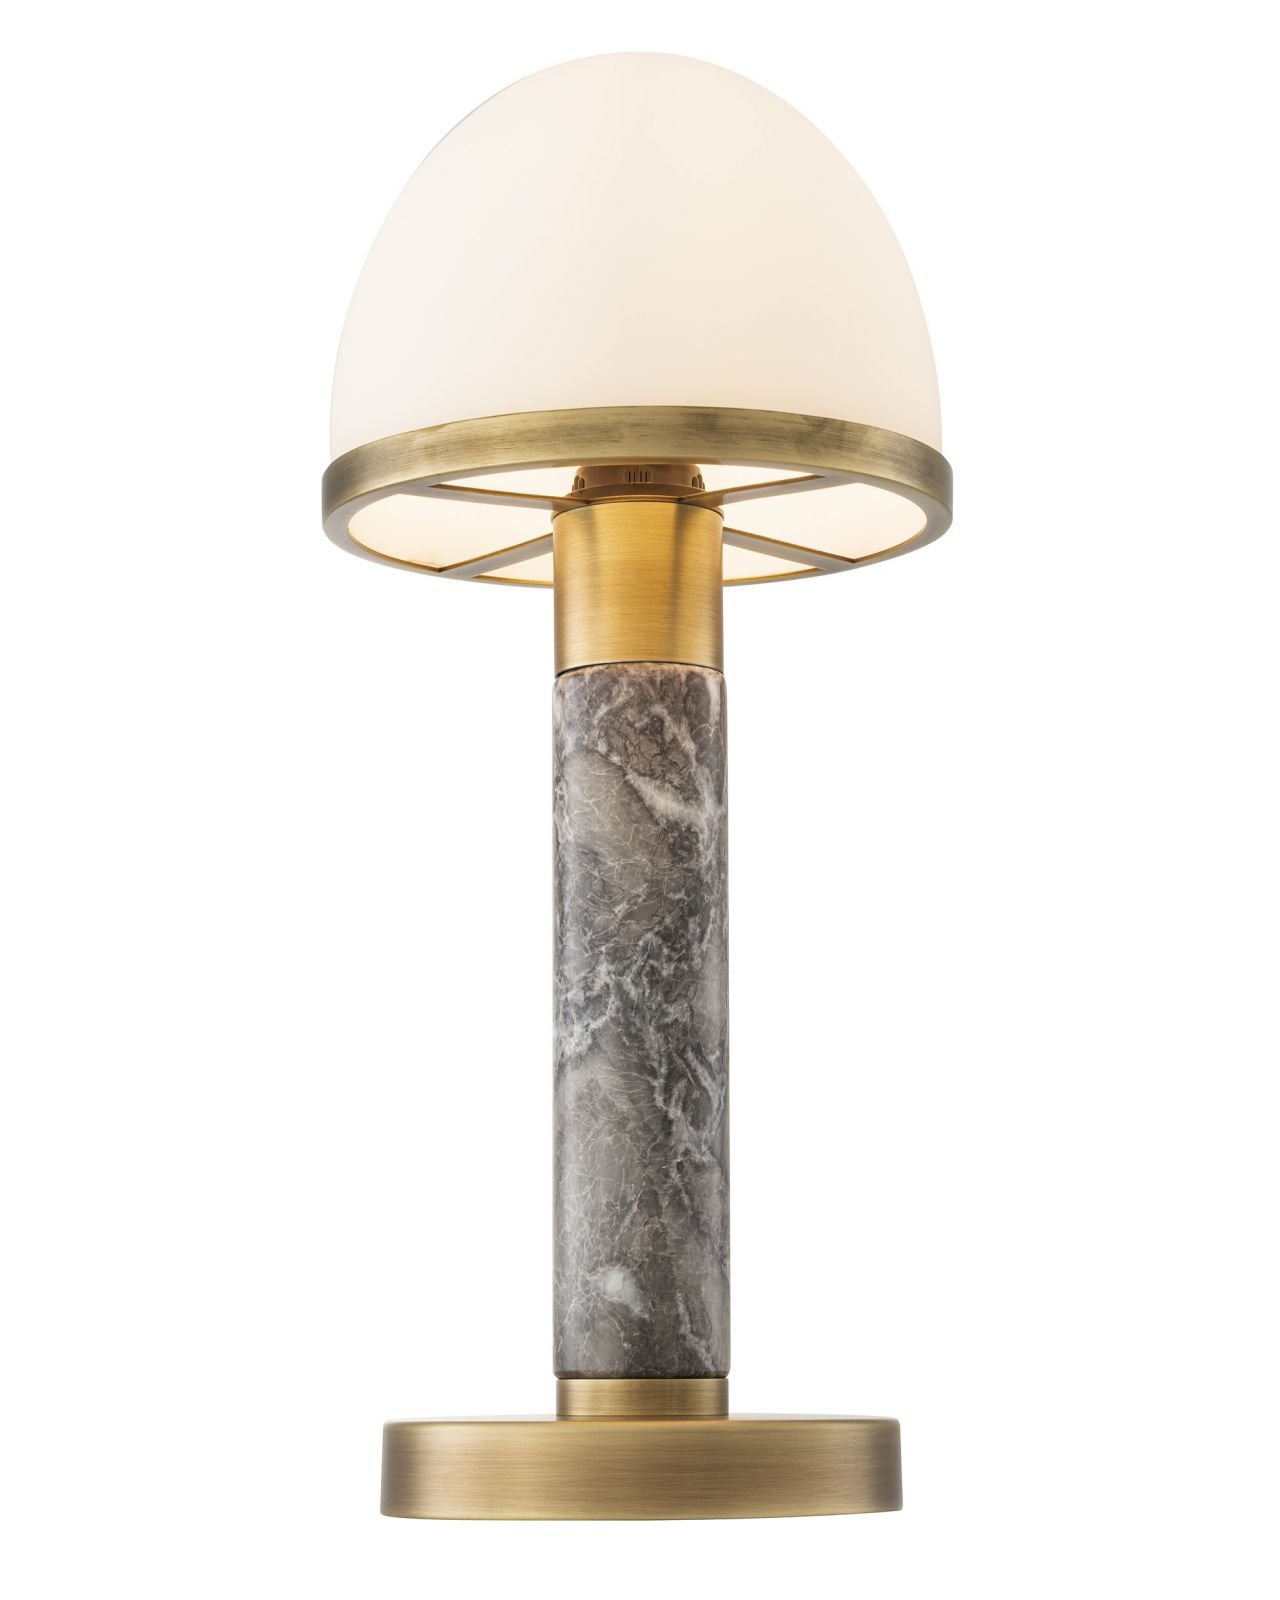 Ziegèl bordslampa antique brass